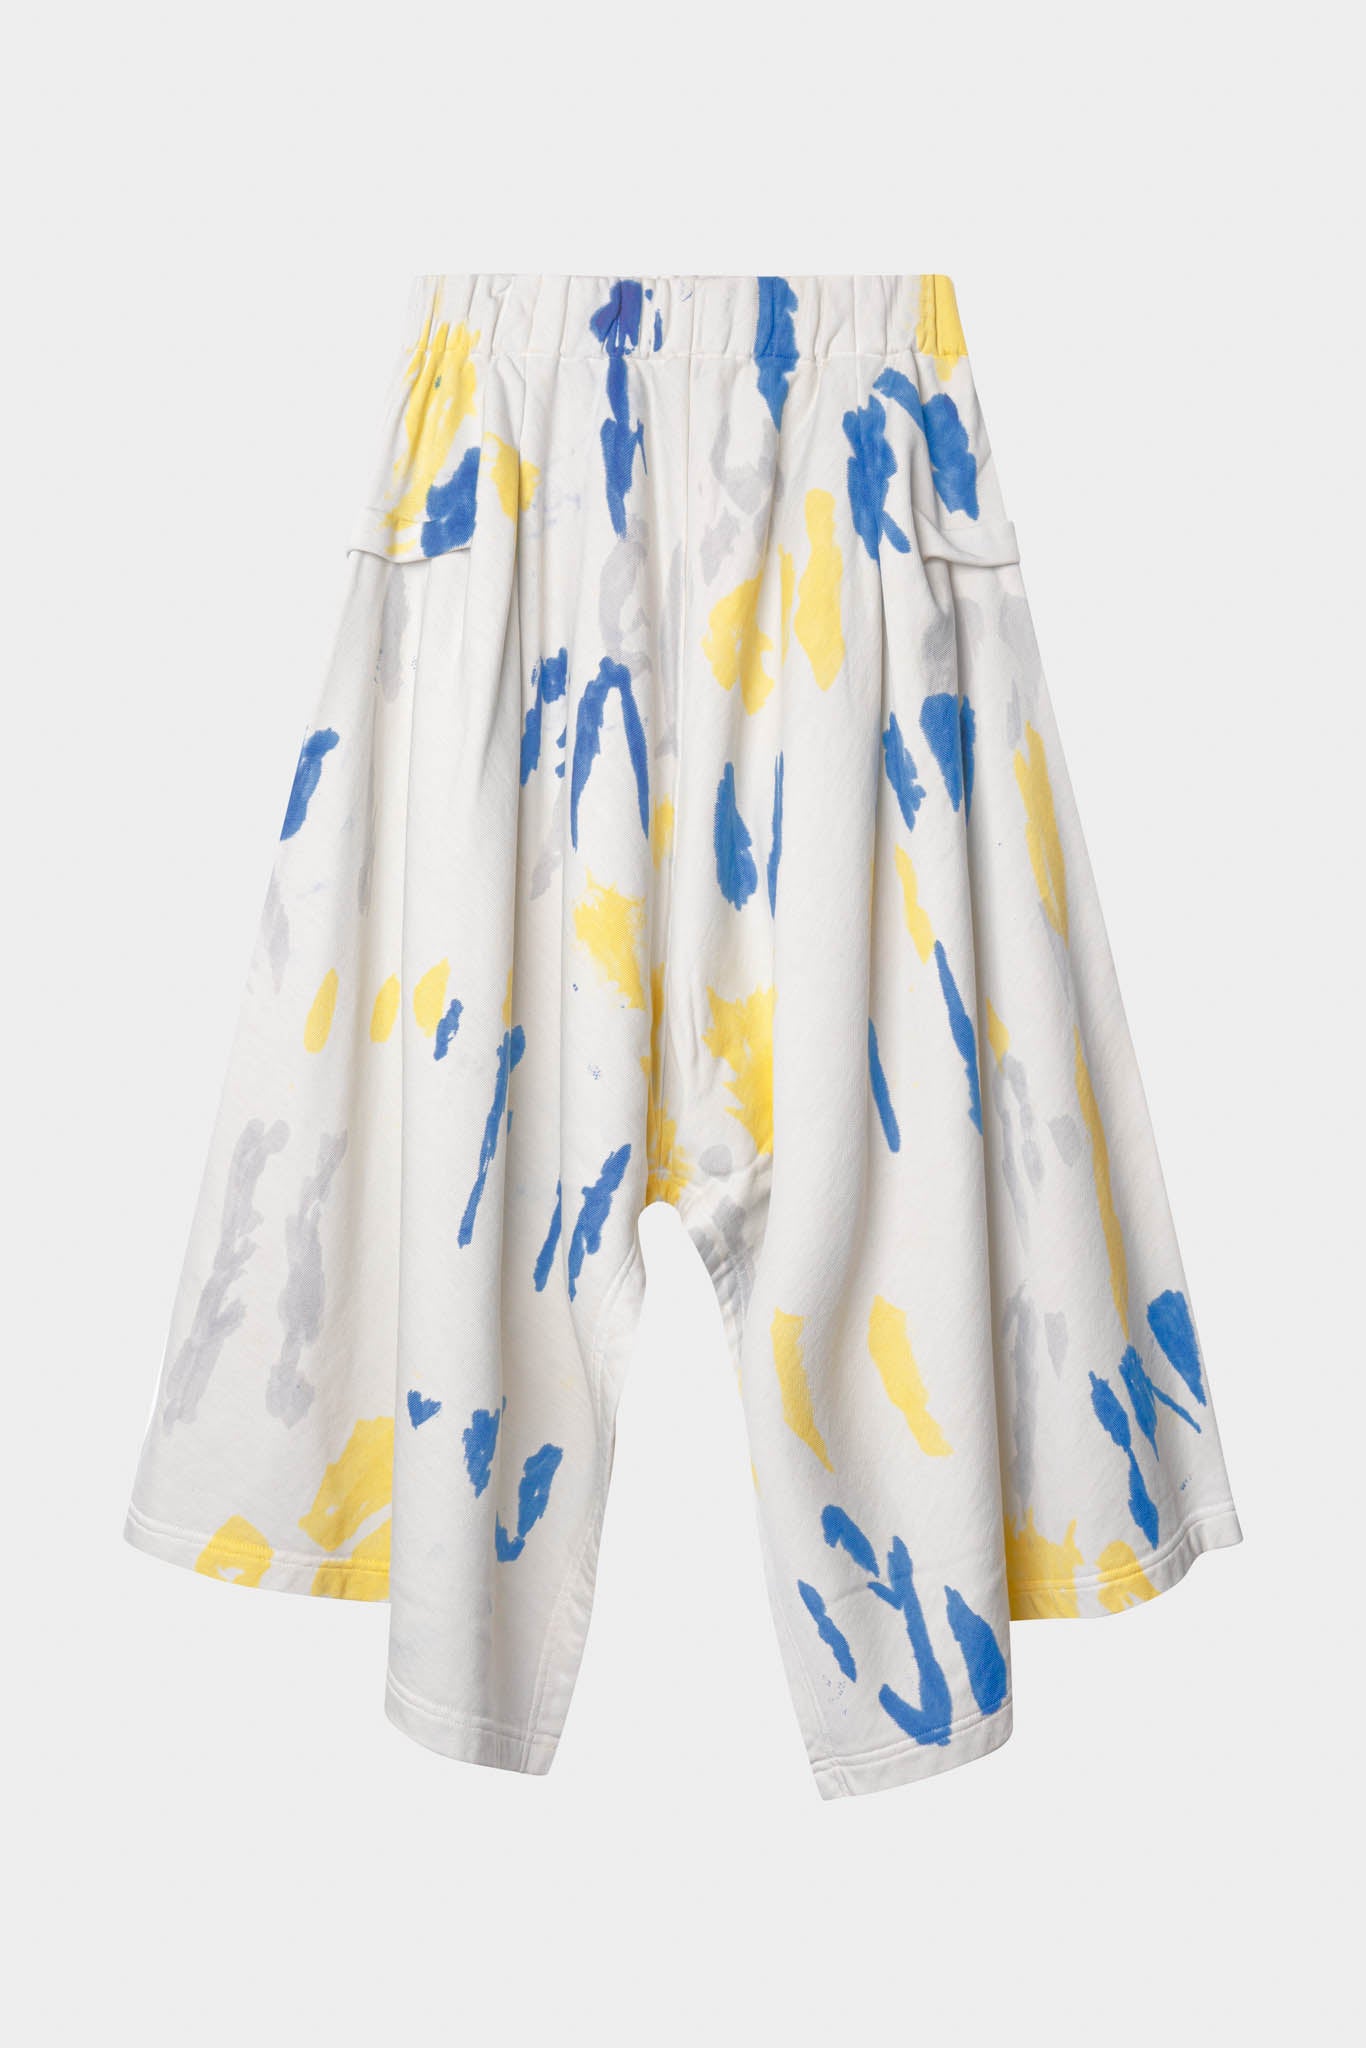 Selectshop FRAME - FENG CHEN WANG Multi-Colour Tie Dye Skirt Bottoms Dubai